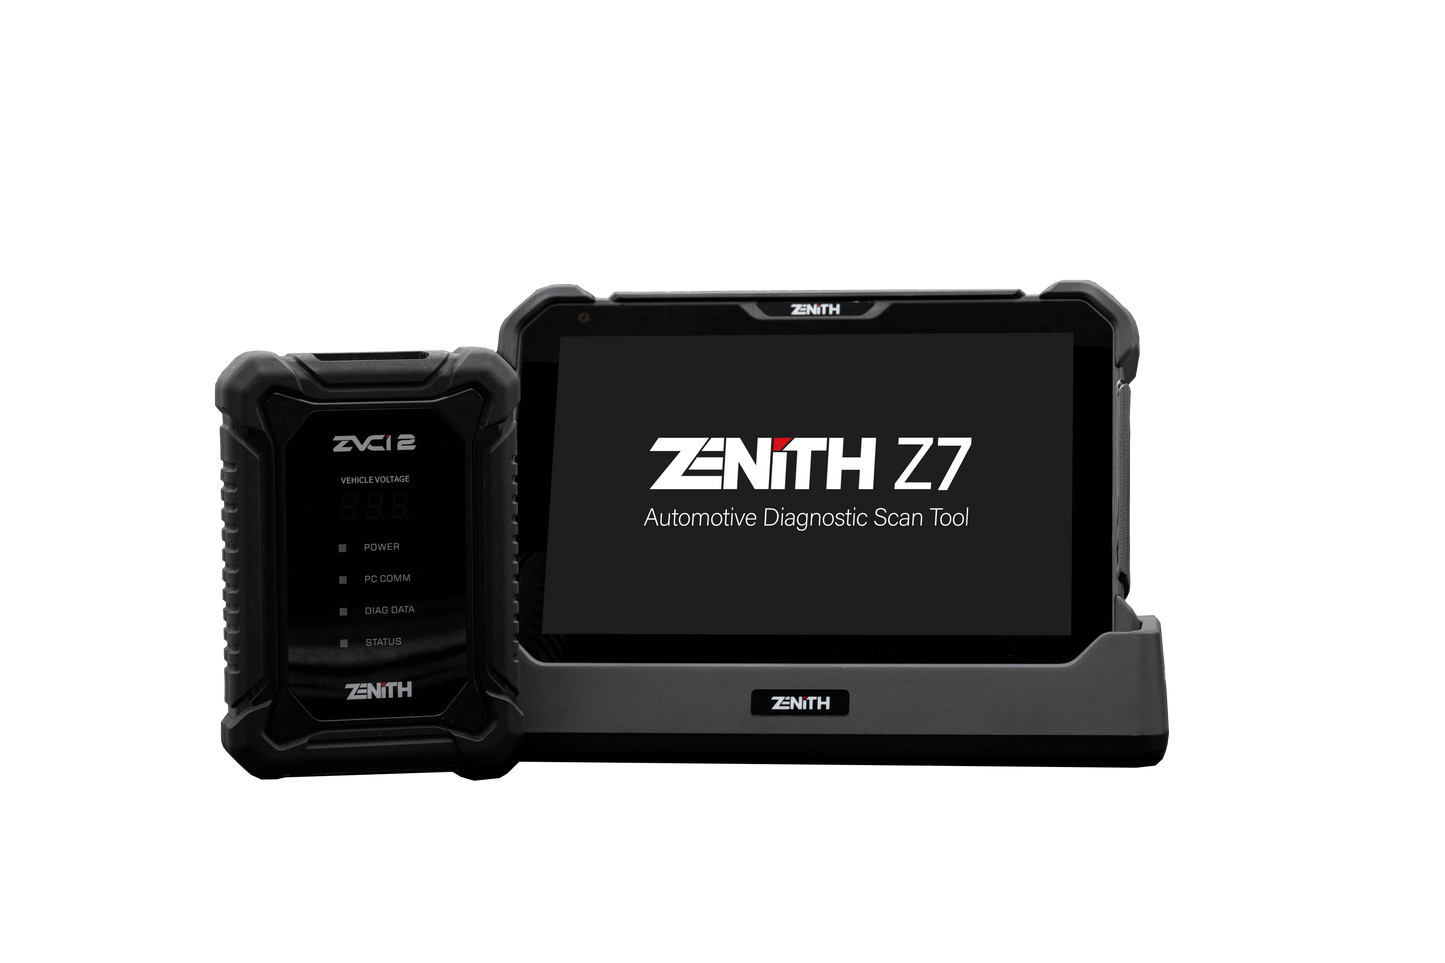 Zenith Z7